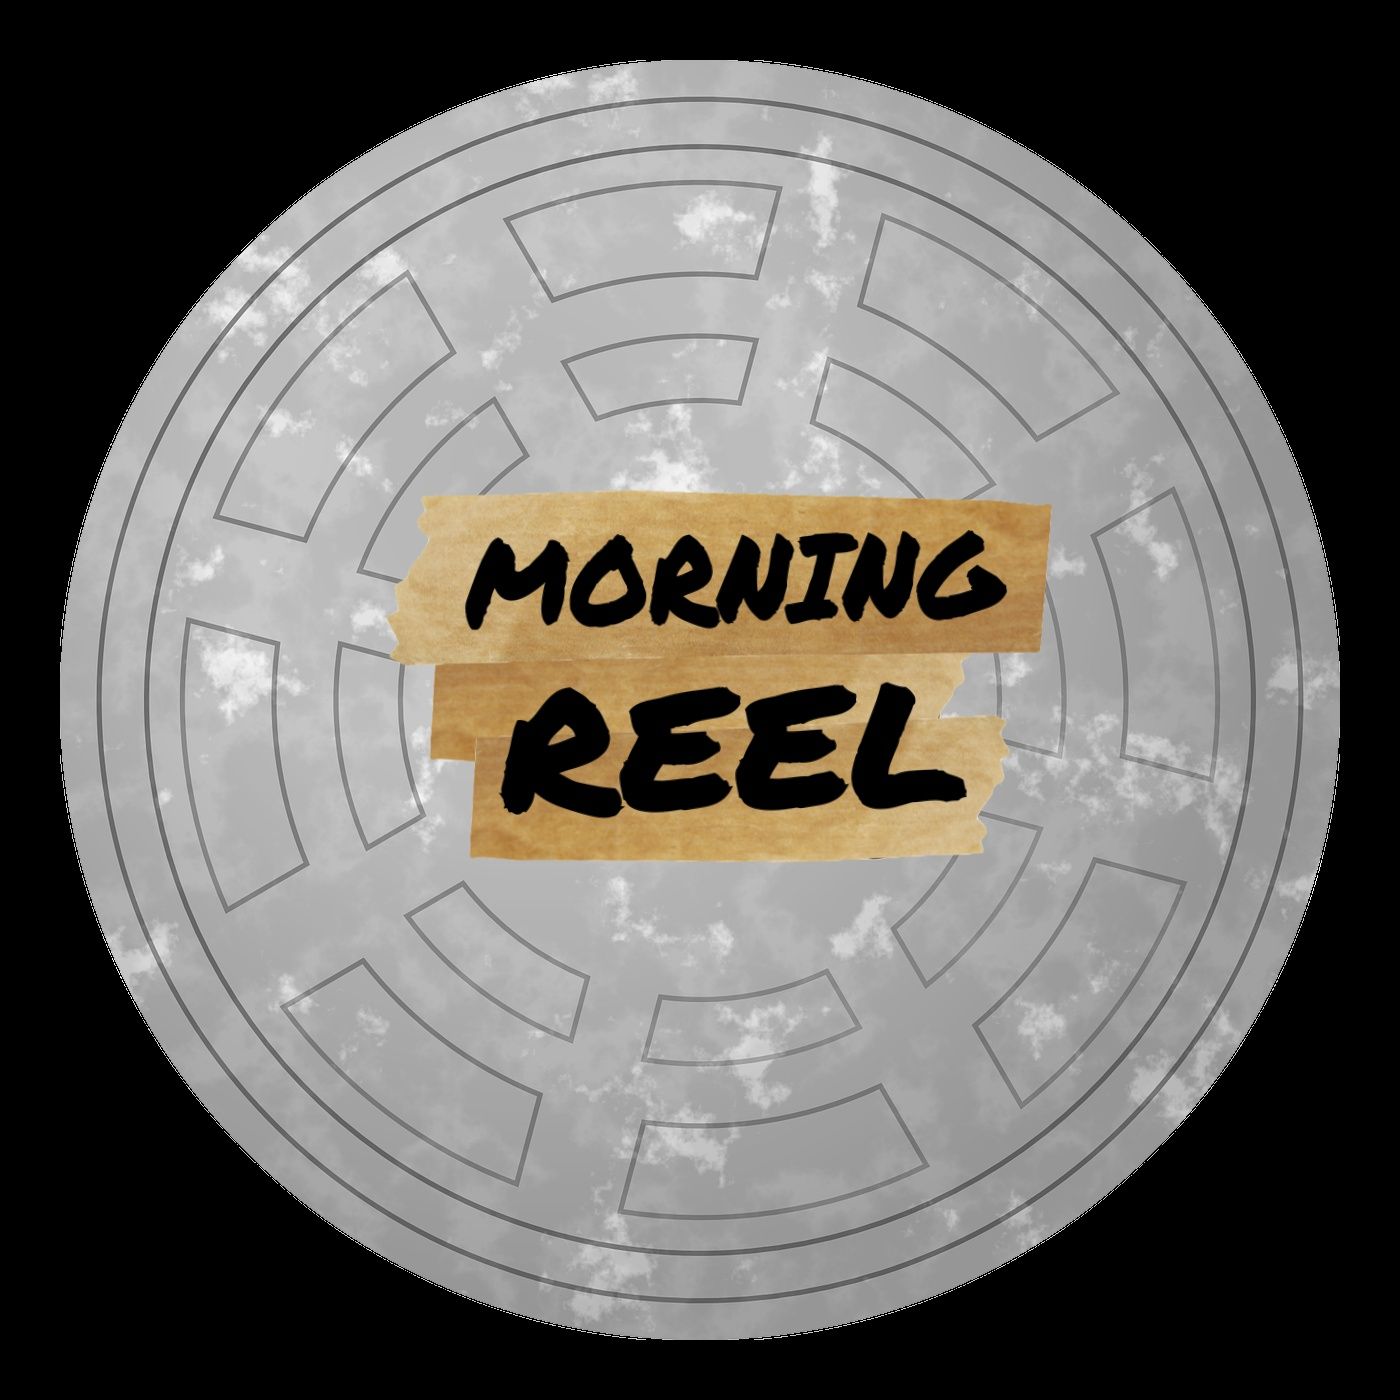 Morning Reel